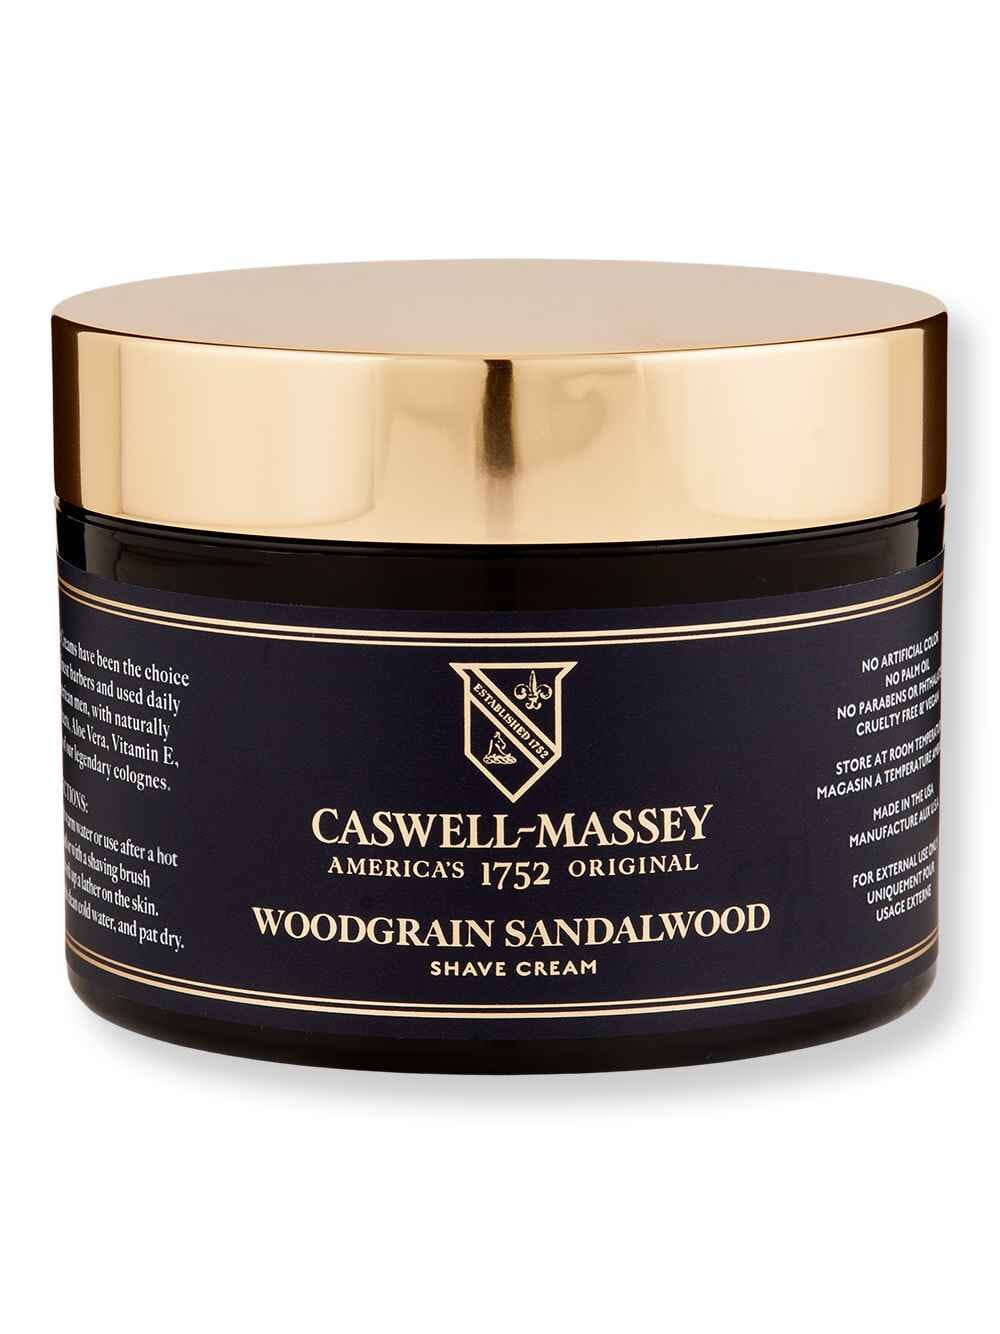 Caswell Massey Caswell Massey Woodgrain Sandalwood Shave Cream 8 oz Shaving Creams, Lotions & Gels 